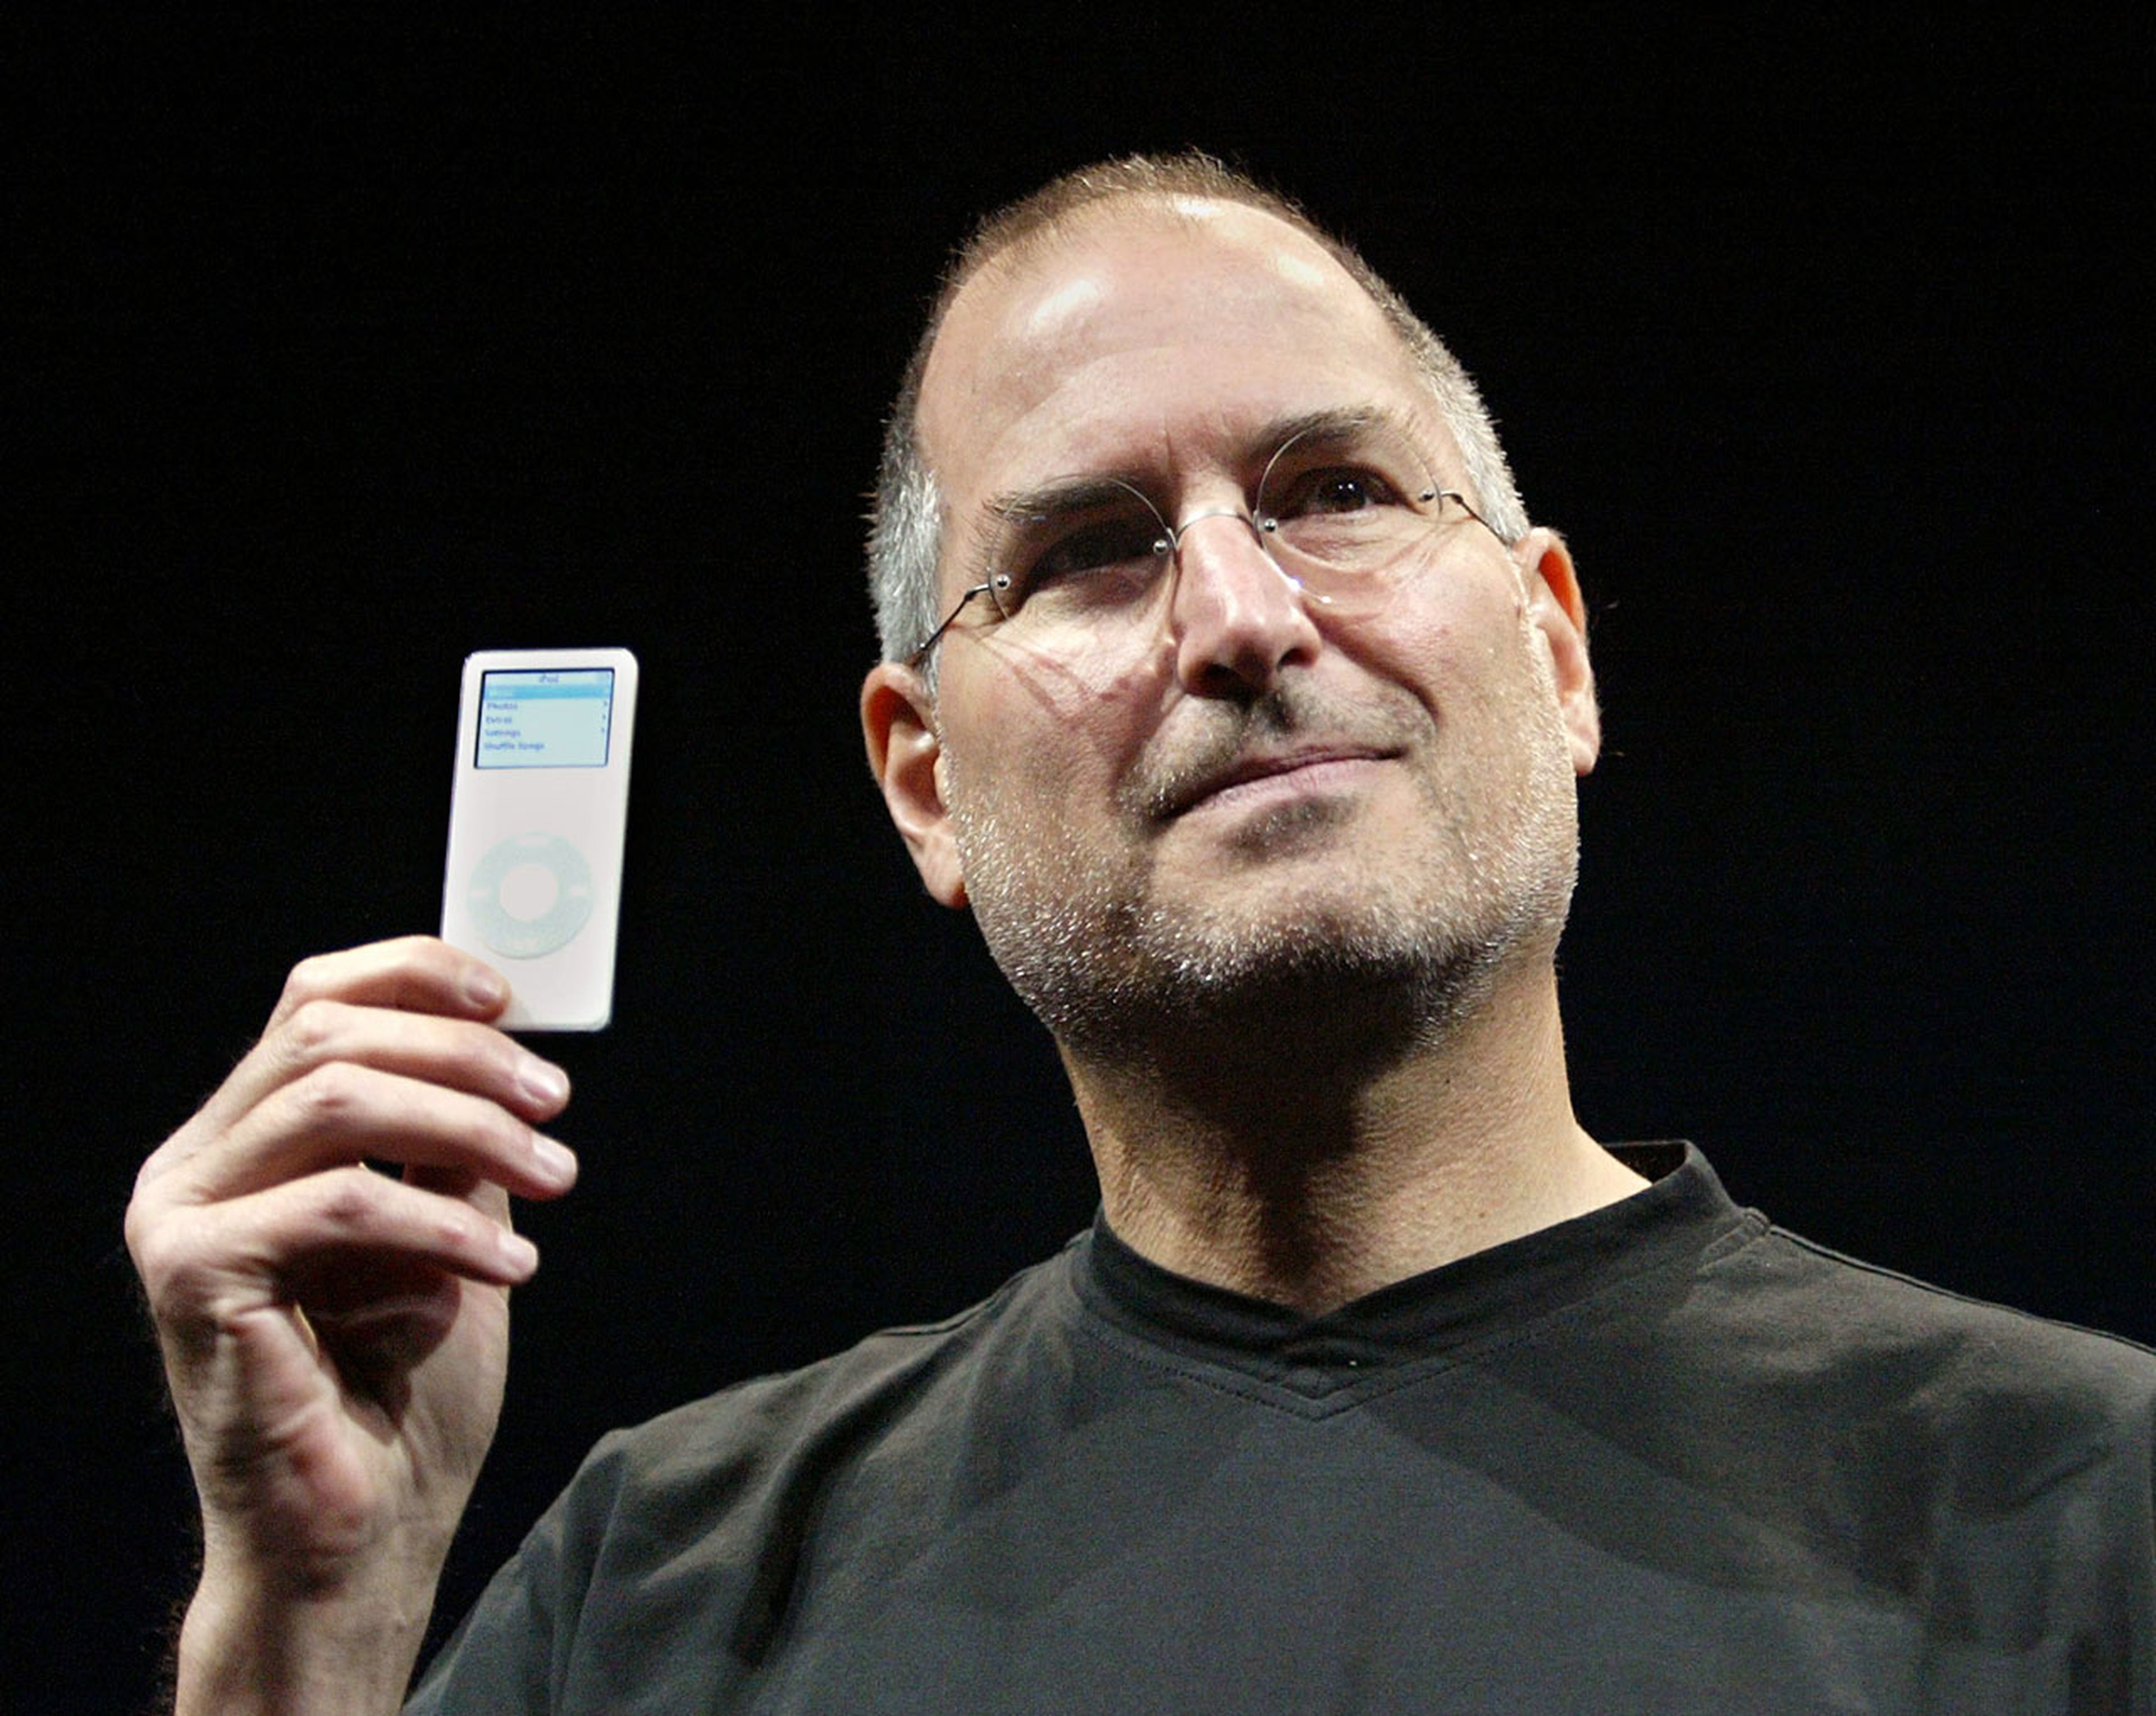 Steve Jobs, cofundador de Apple, presenta en 2005 el iPod Nano.